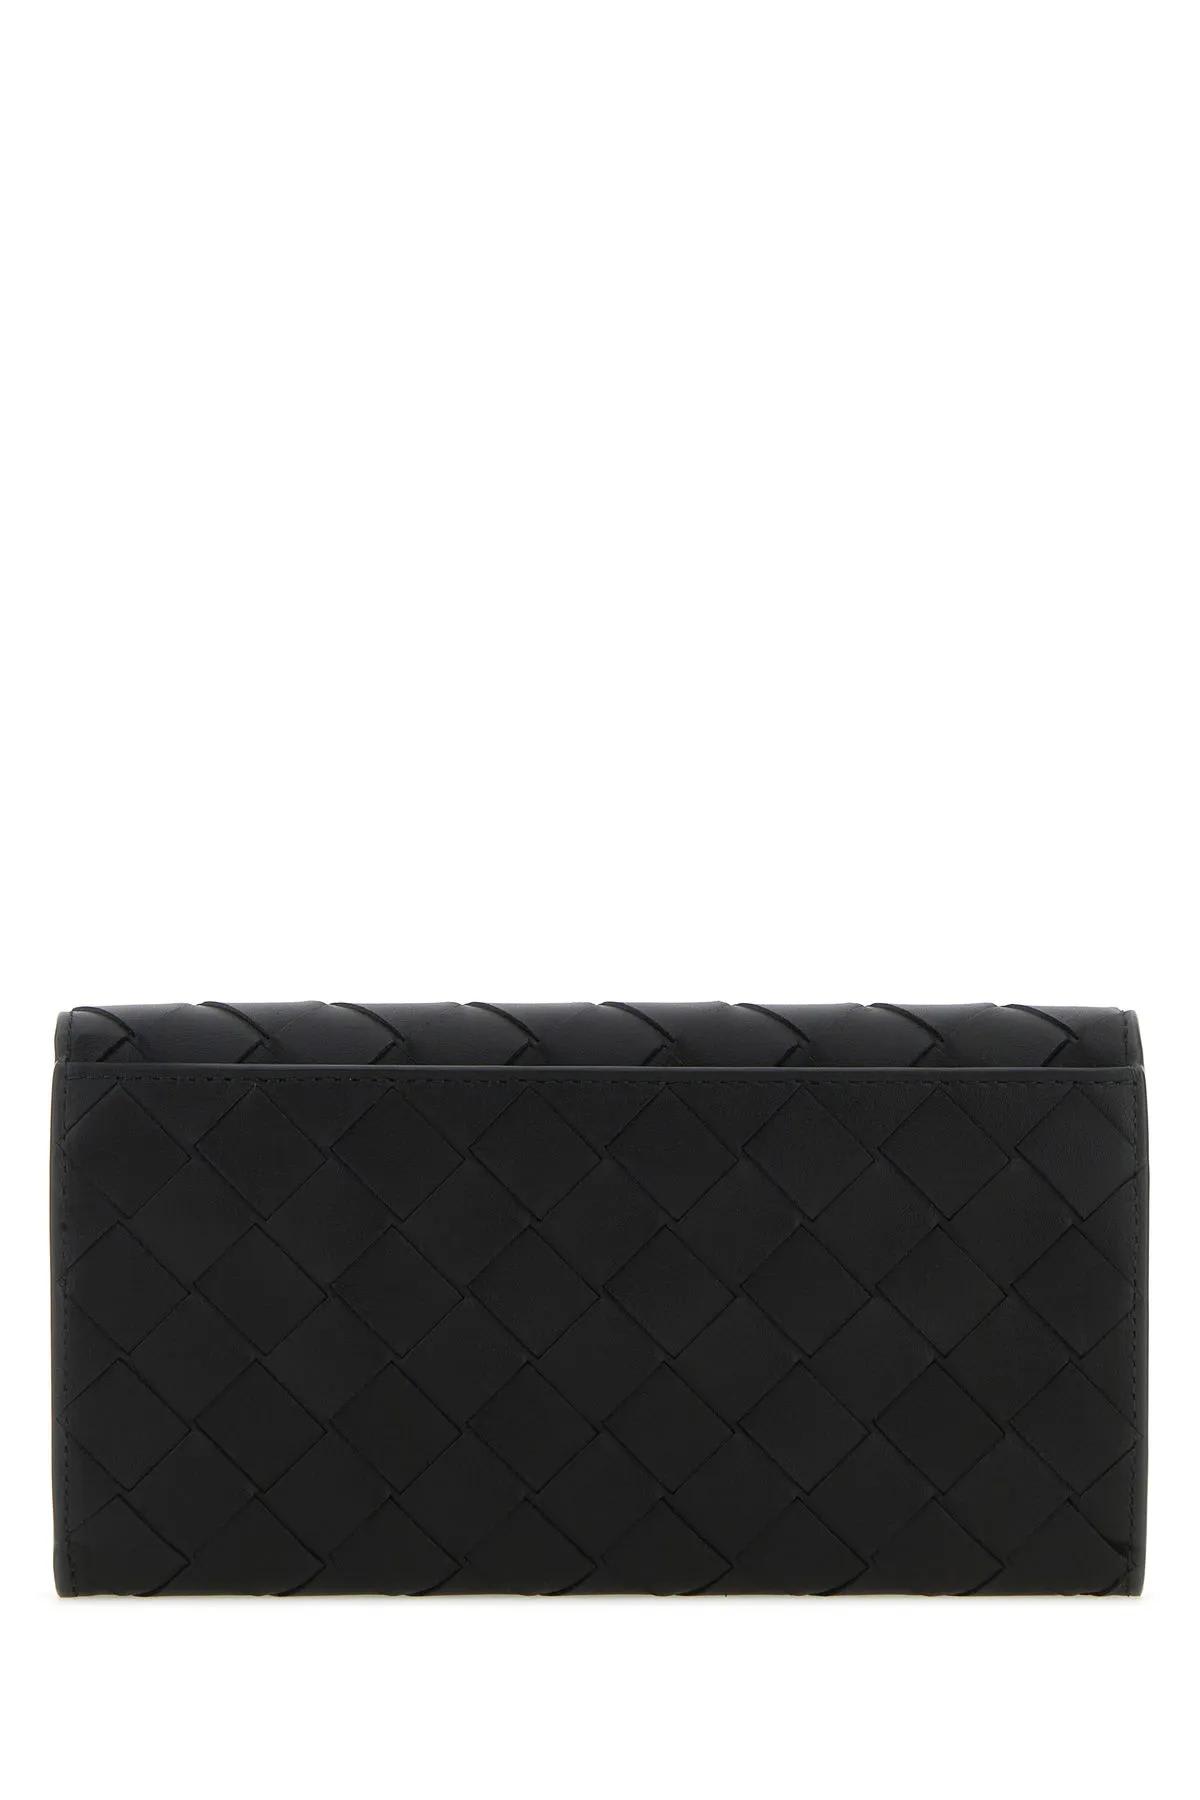 Shop Bottega Veneta Black Leather Wallet